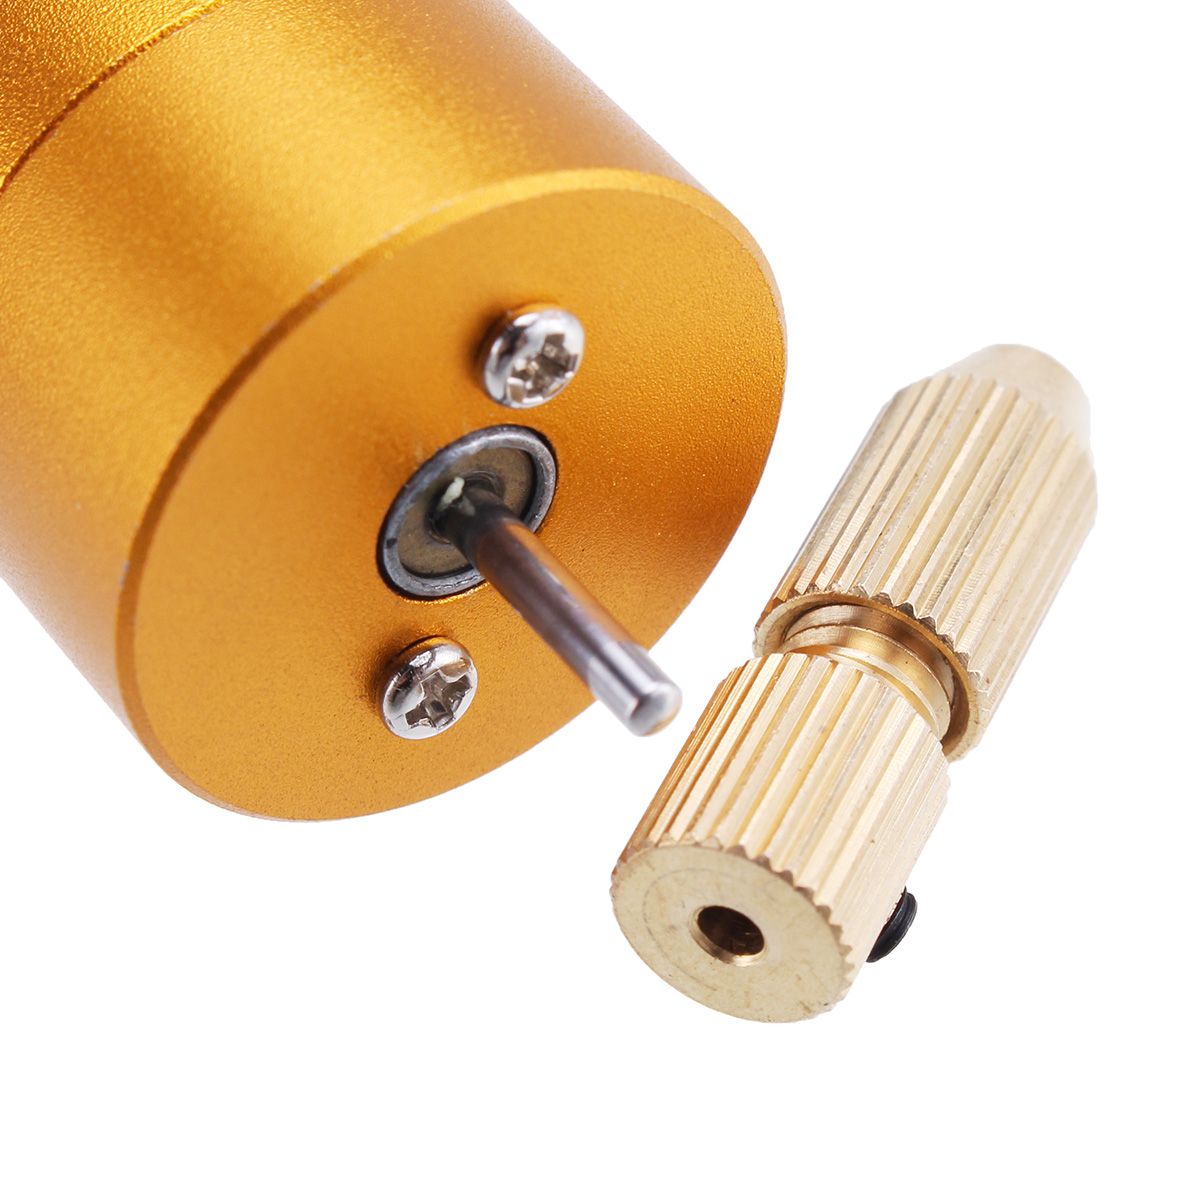 Mini-Electric-Drill-DIY-Polishing-Drilling-Grinding-Cutting-Tools-1221040